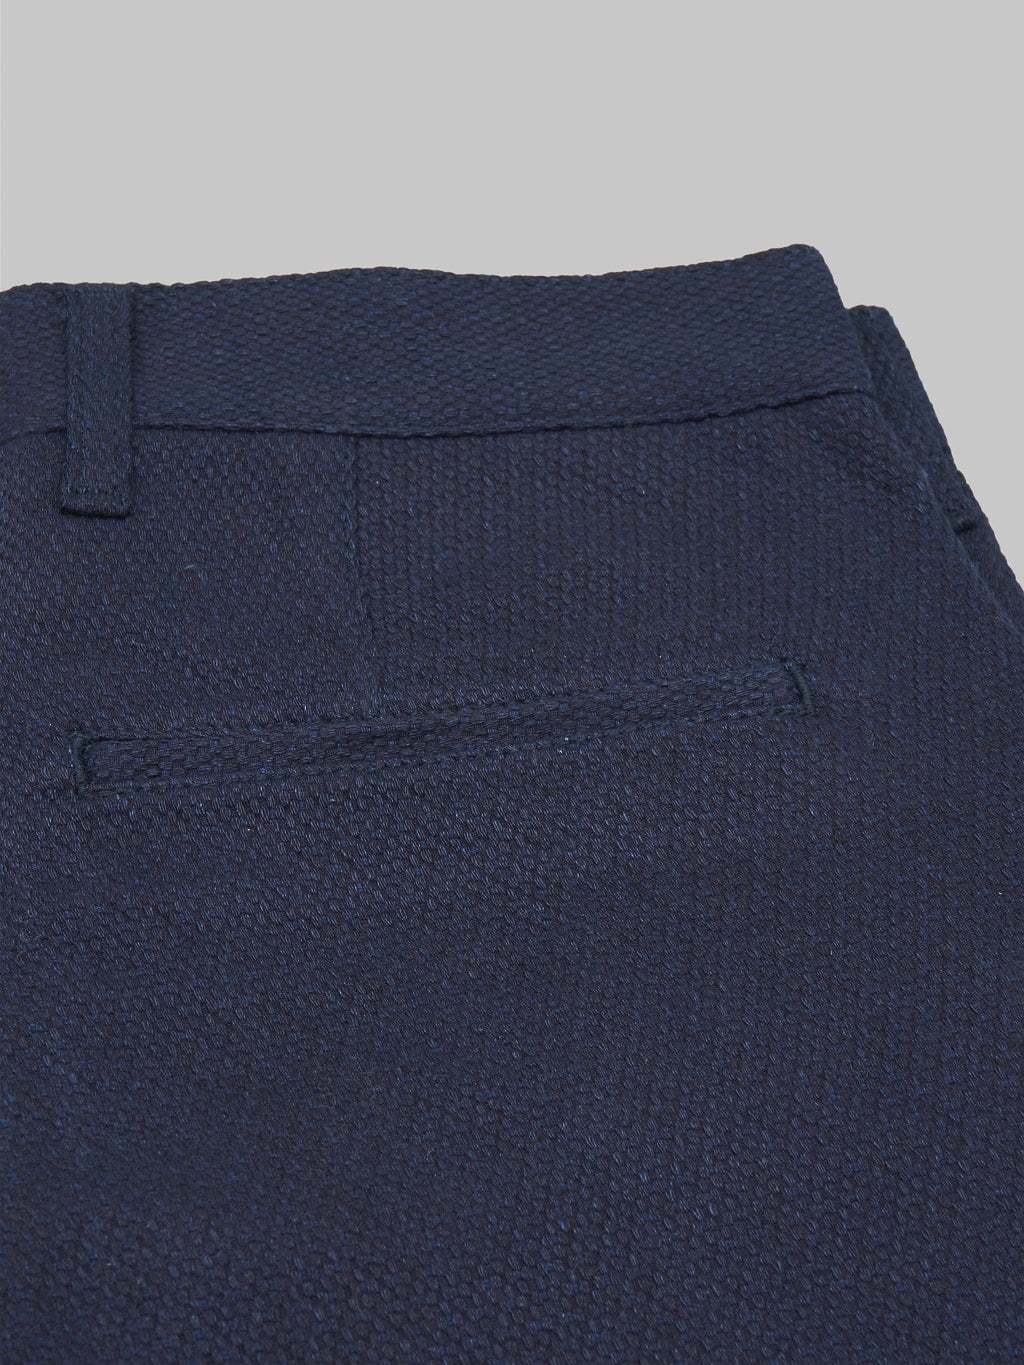 Japan Blue sashiko indigo jacquard shorts back details